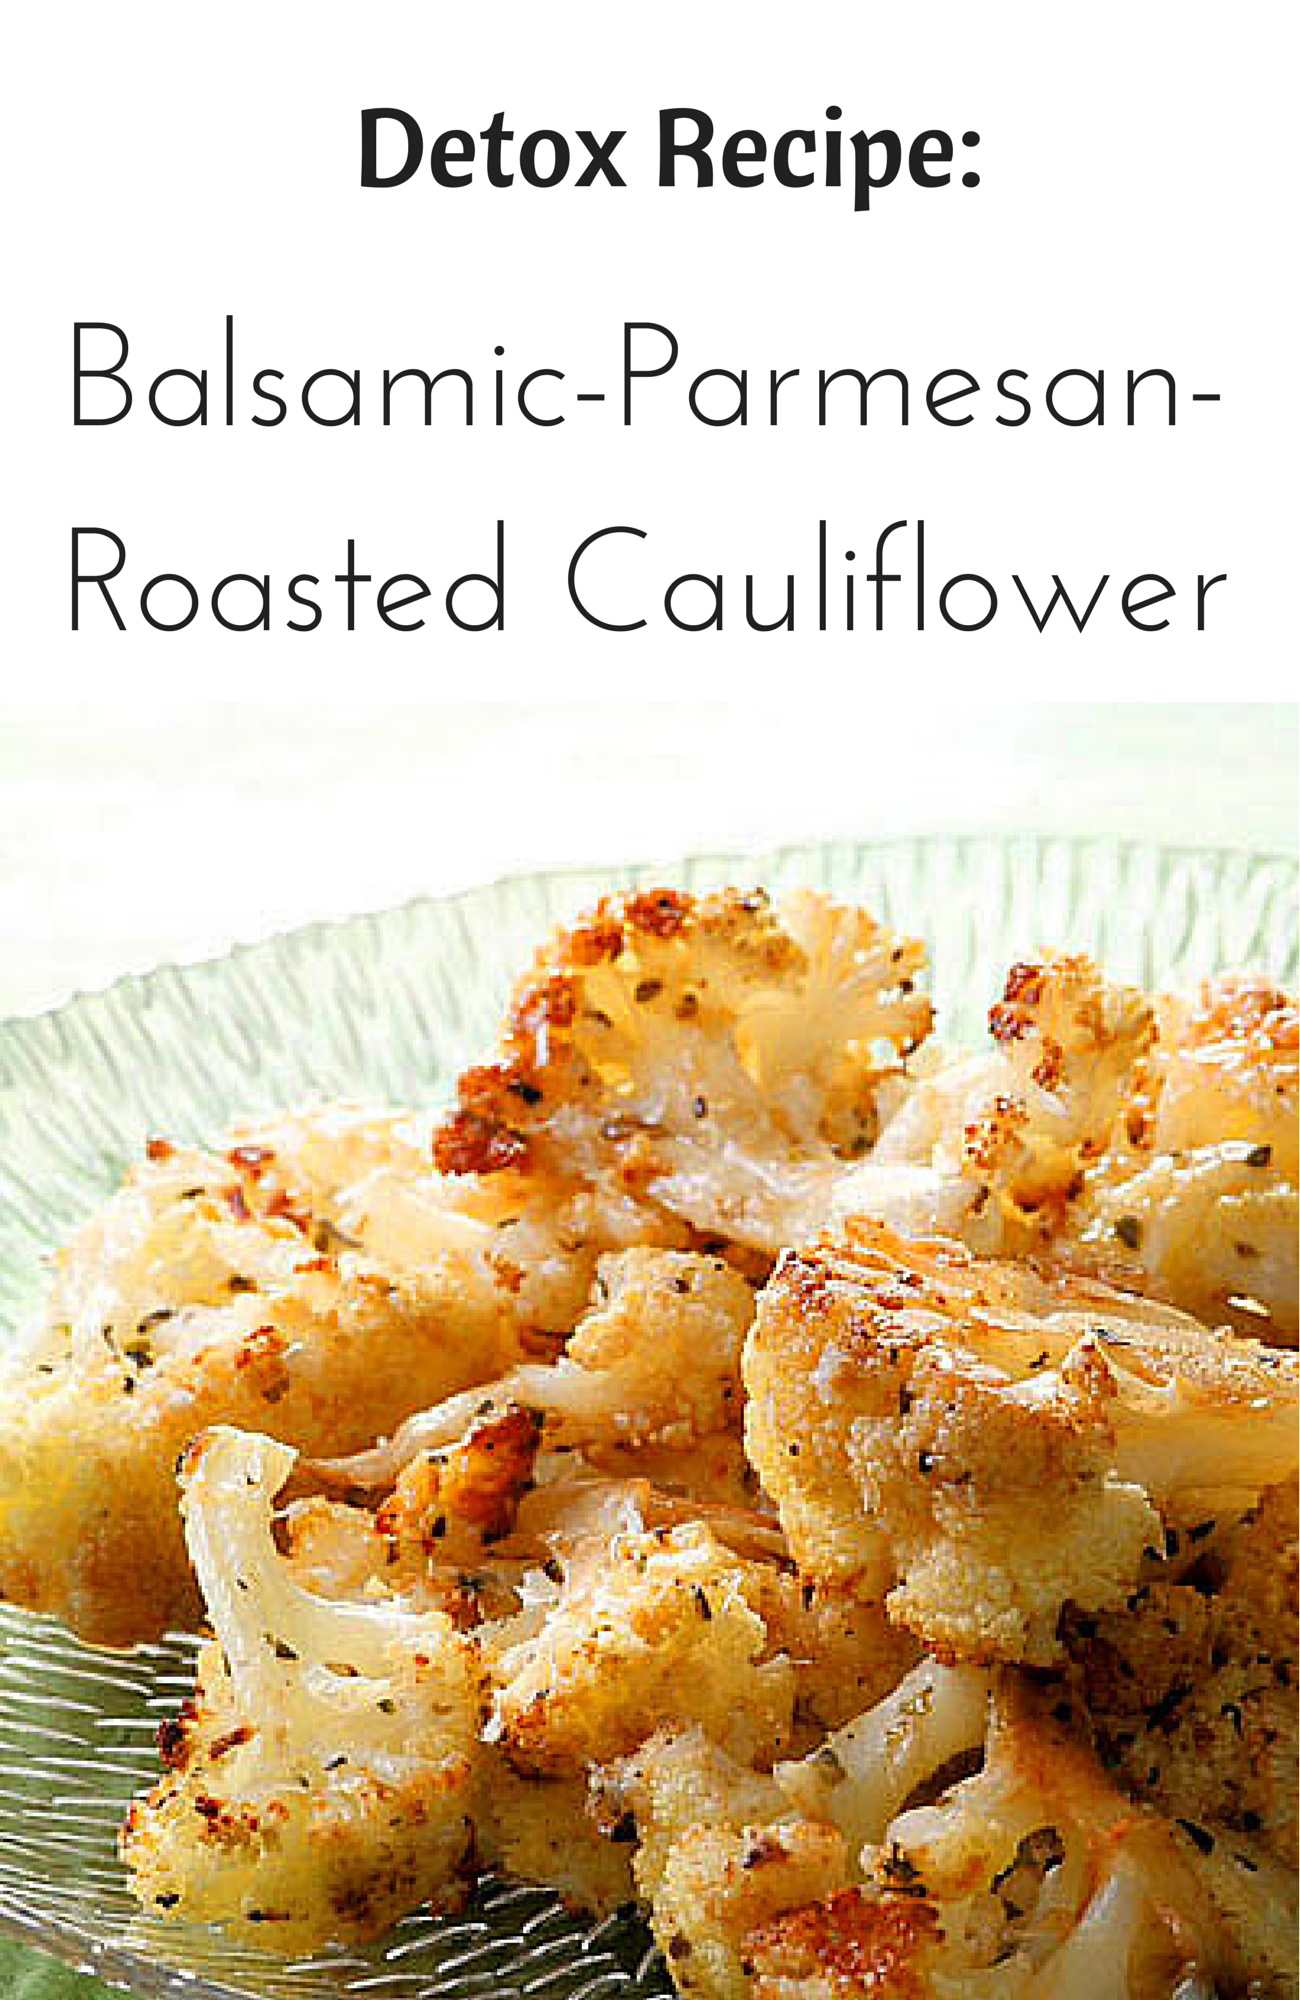 Detox Recipe: Balsamic-Parmesan-Roasted Cauliflower